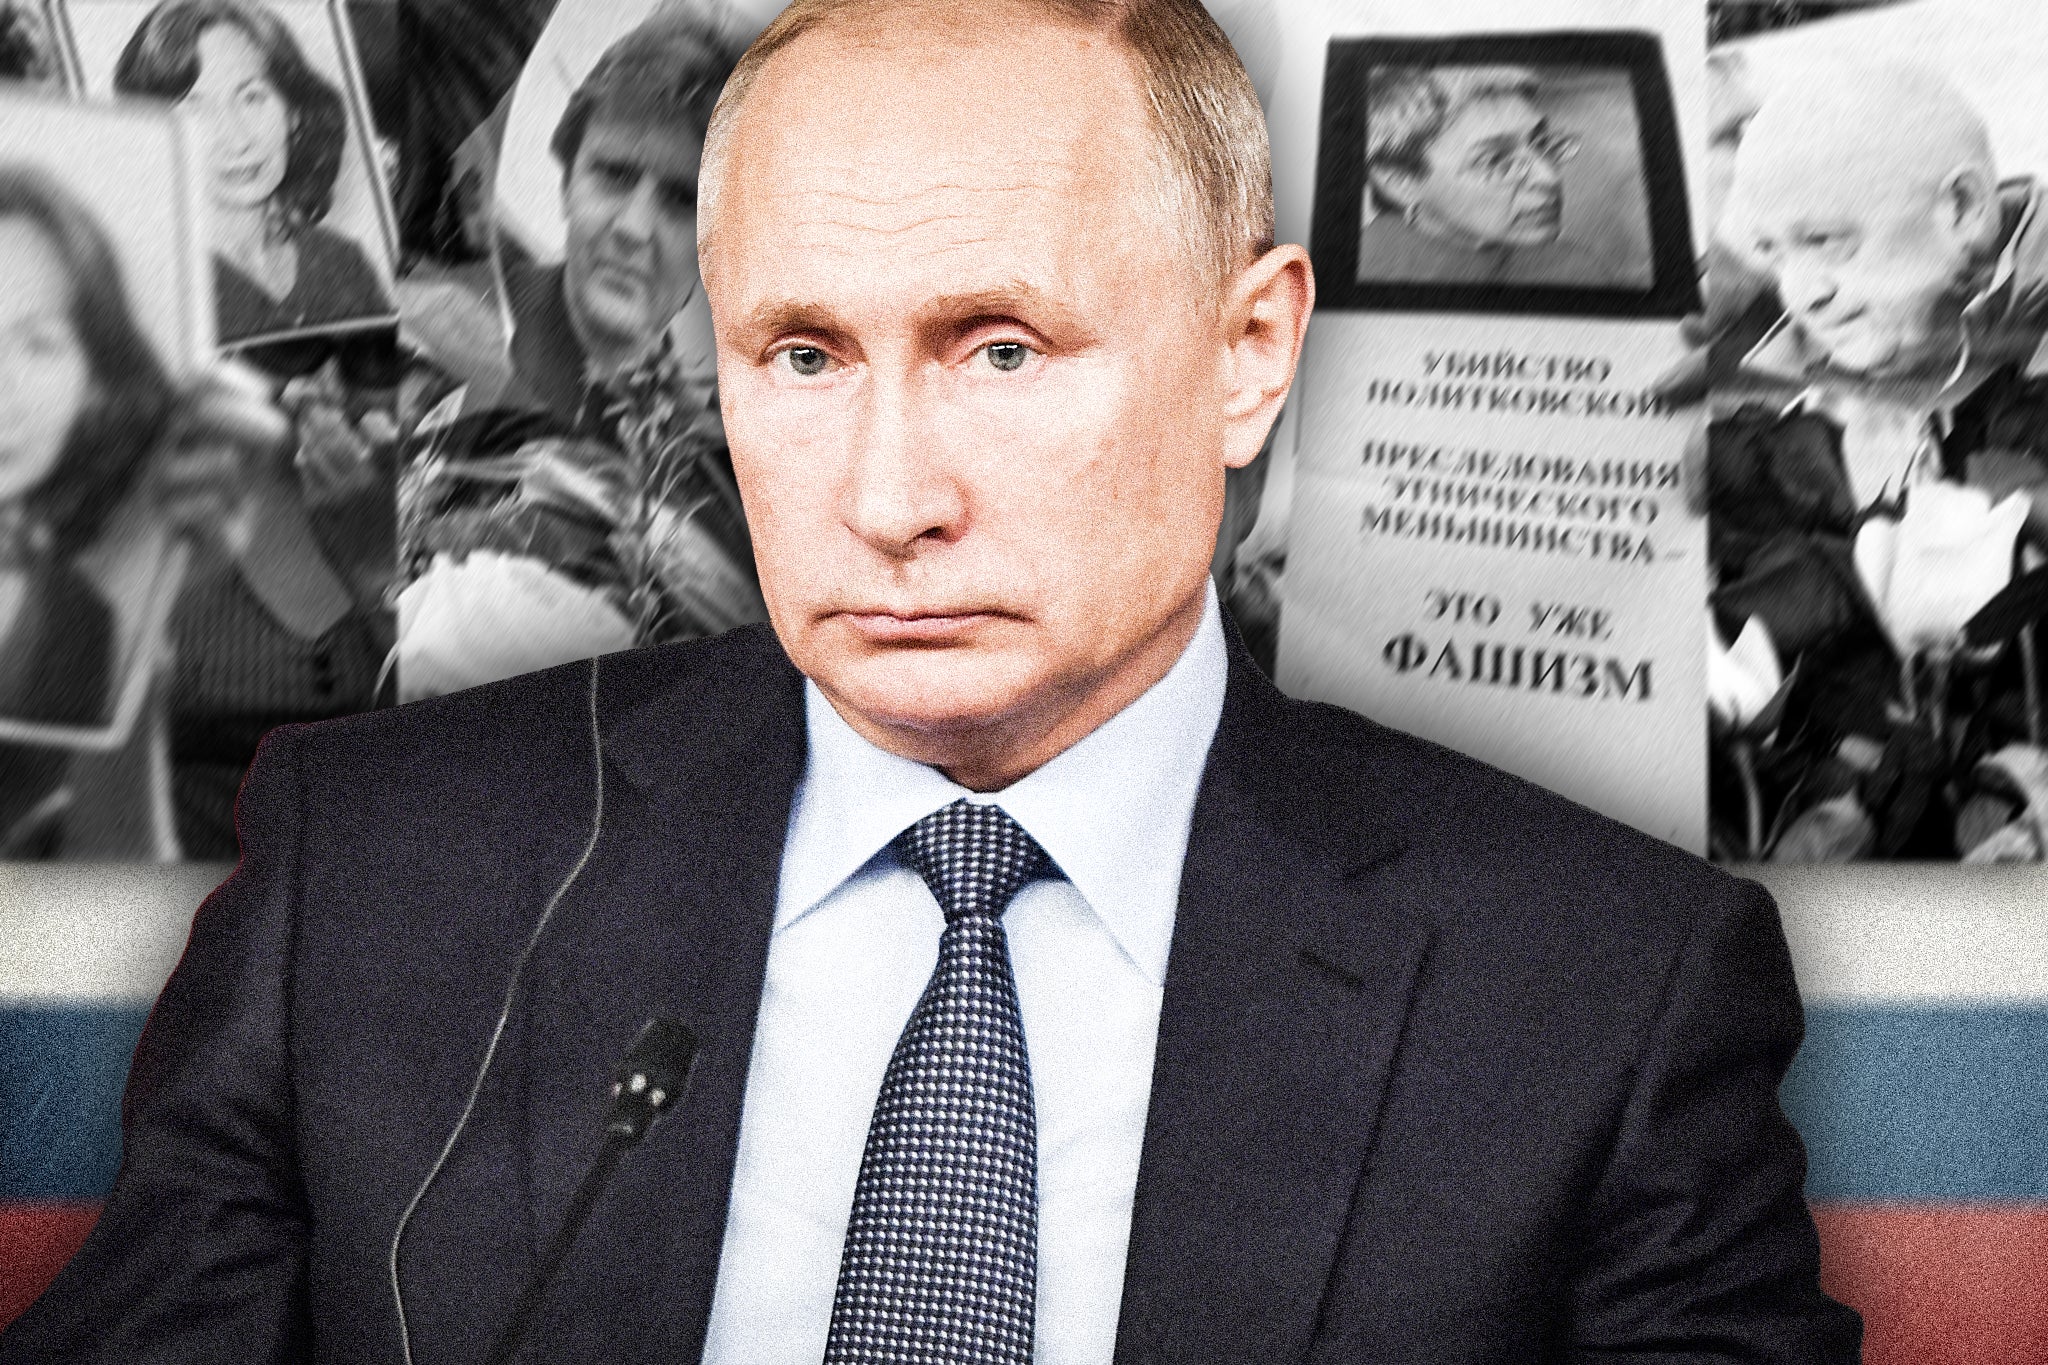 Punishment for crossing Vladimir Putin is sometimes swift